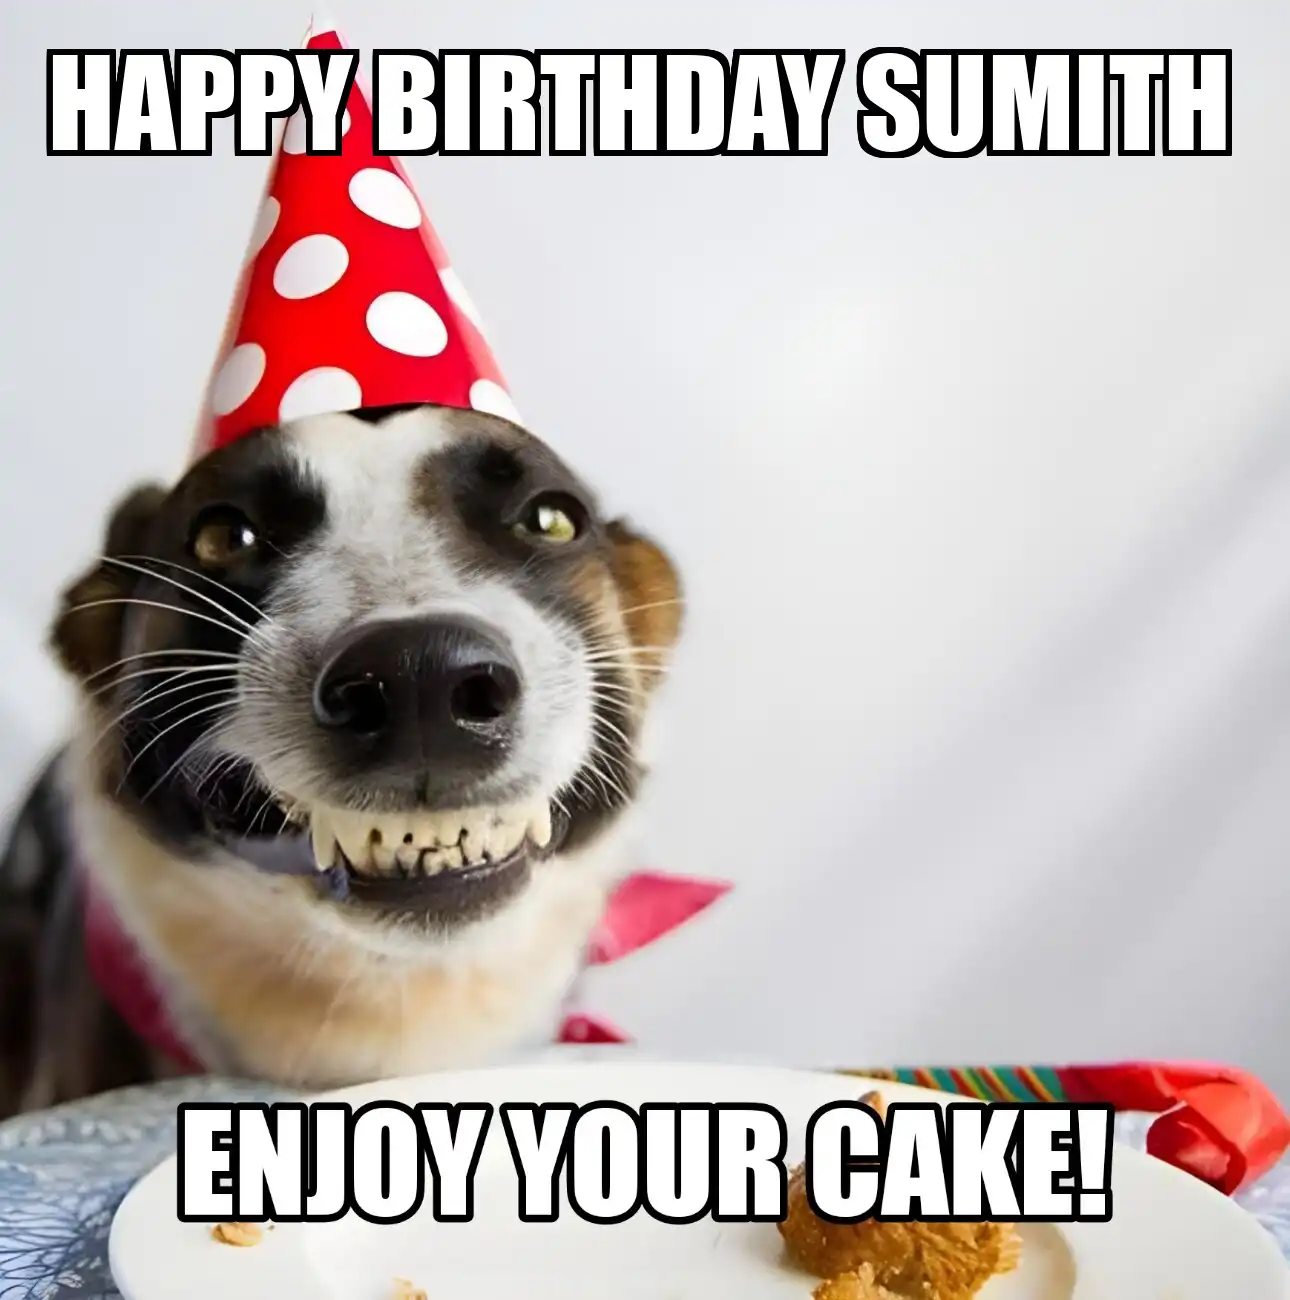 Happy Birthday Sumith Enjoy Your Cake Dog Meme